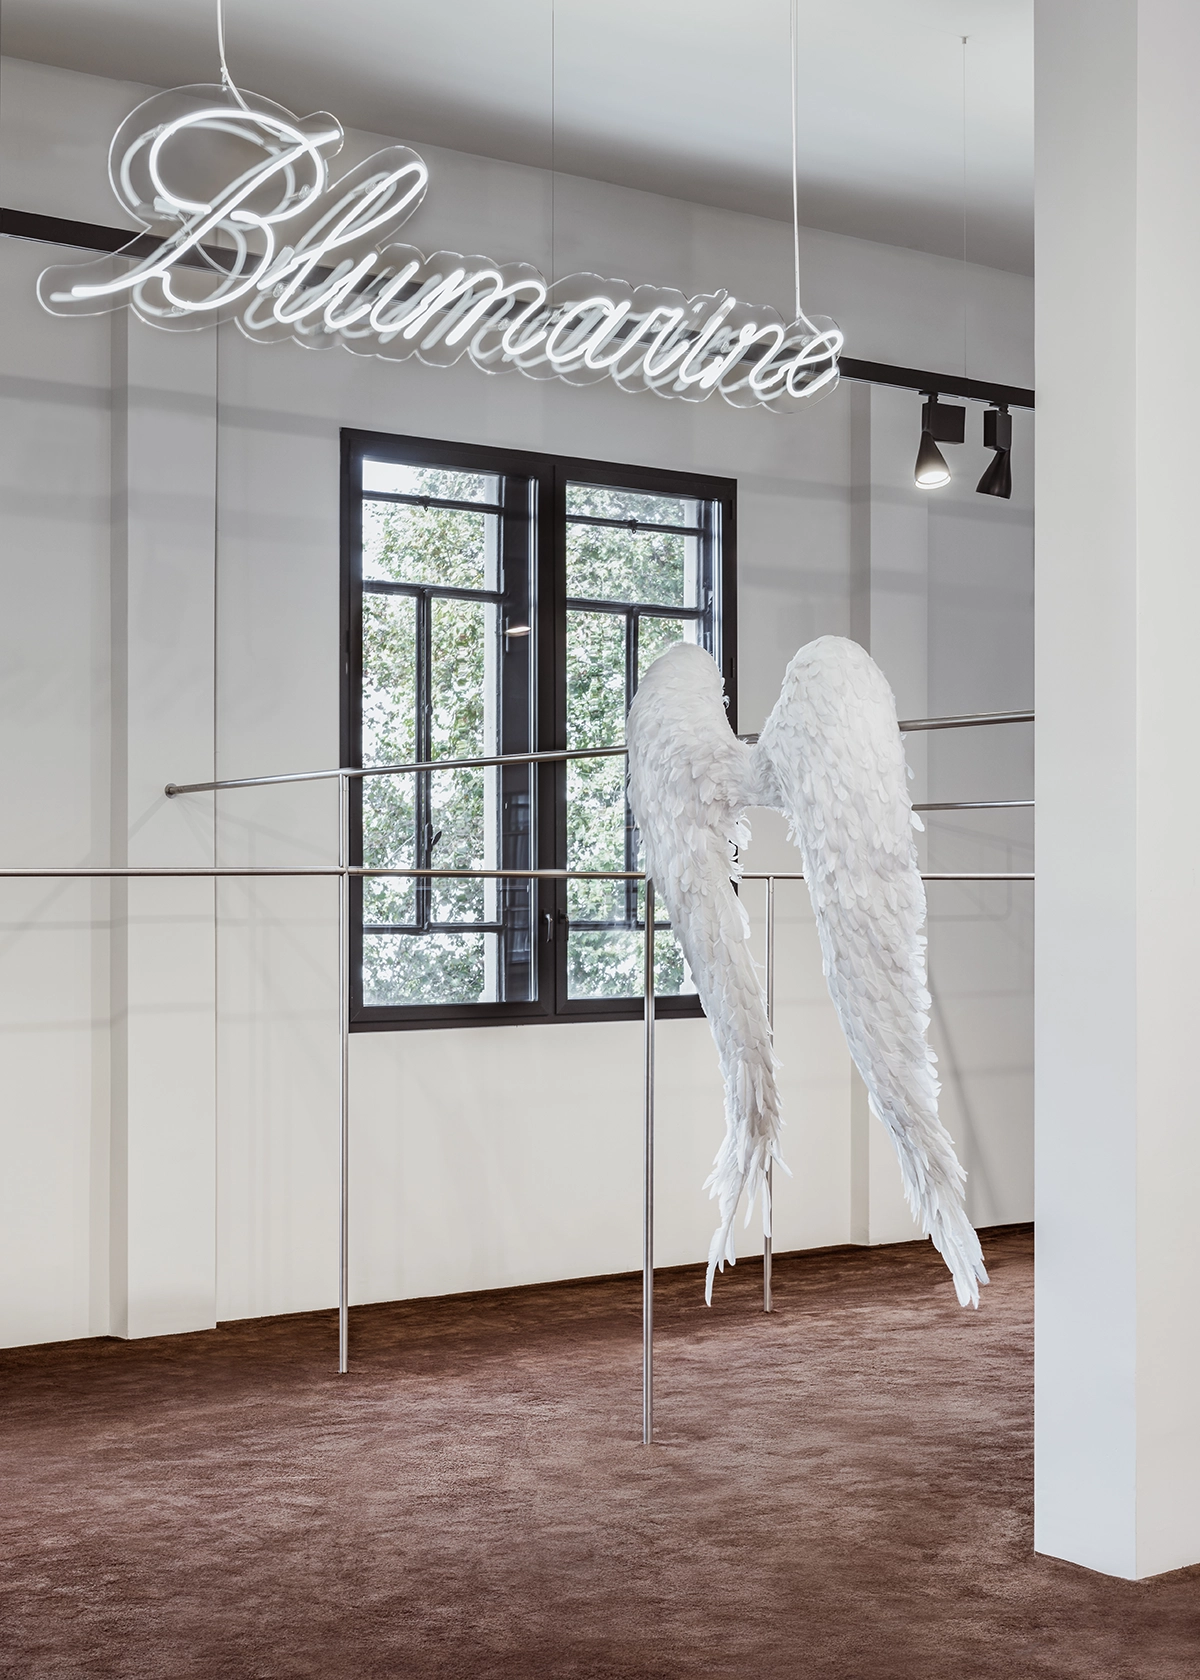 Blumarine - Riccardo Grassi Showroom